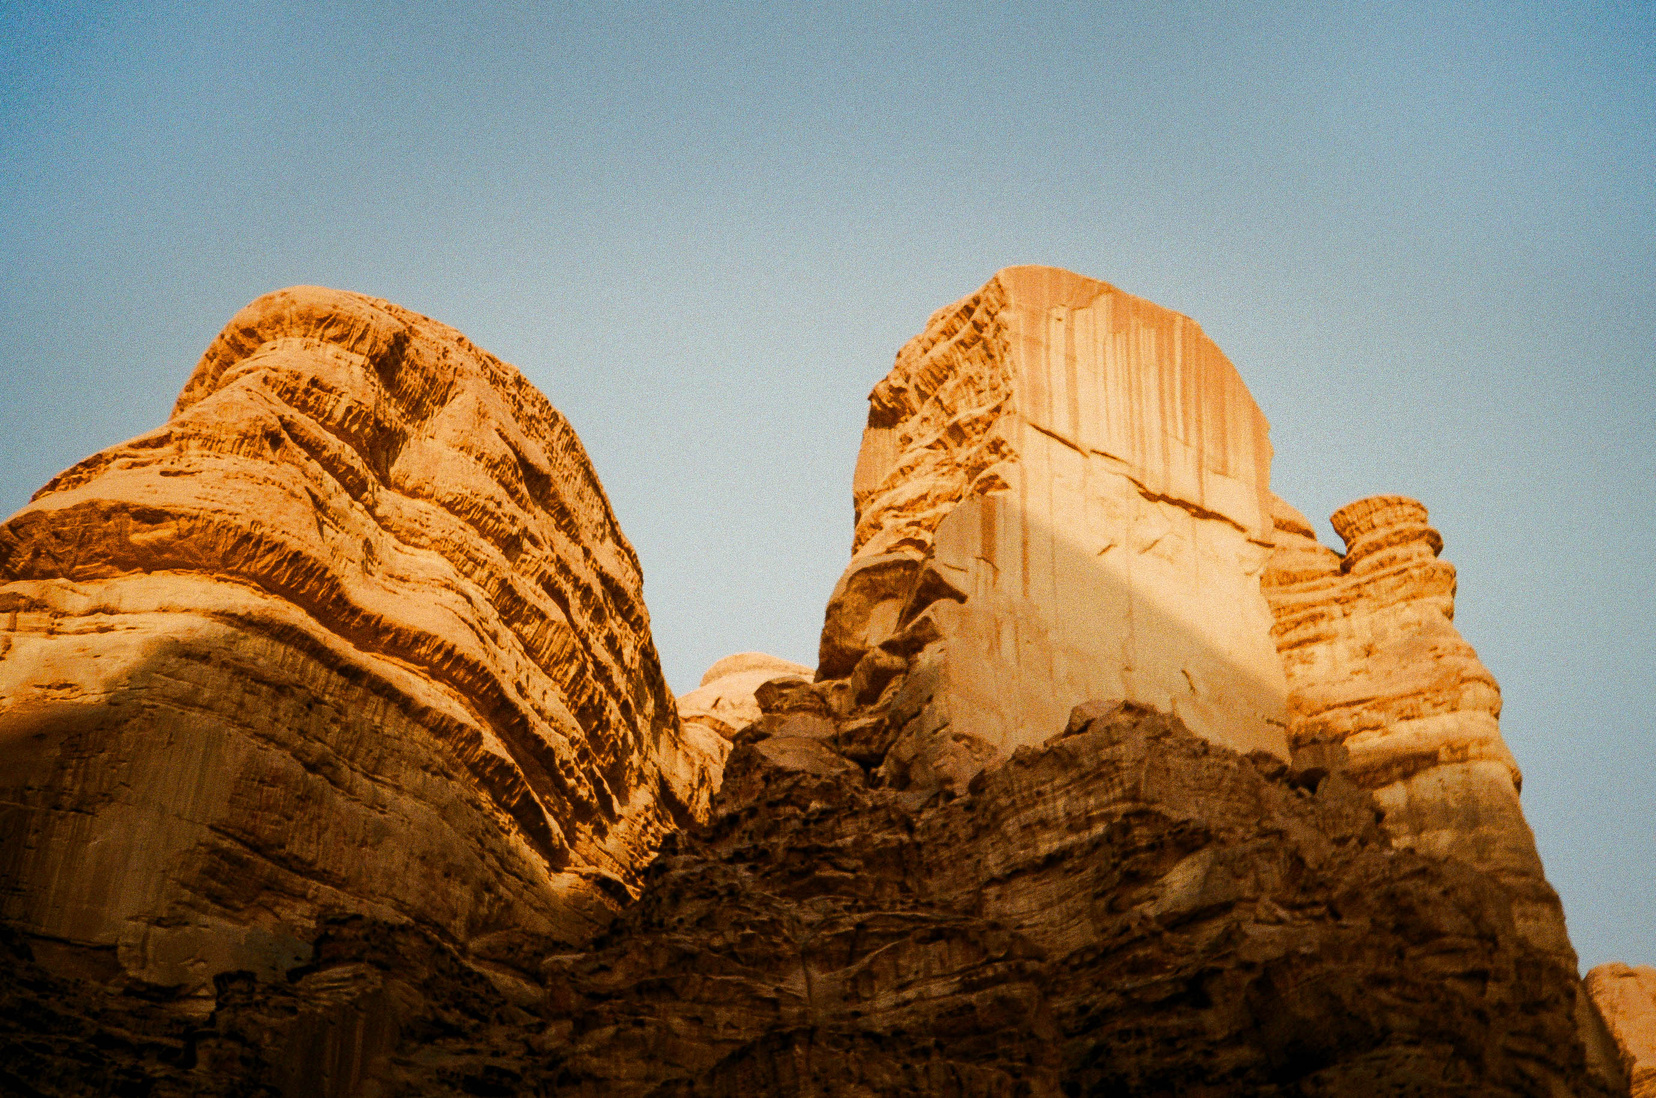 Giant Sandstones against the Sky